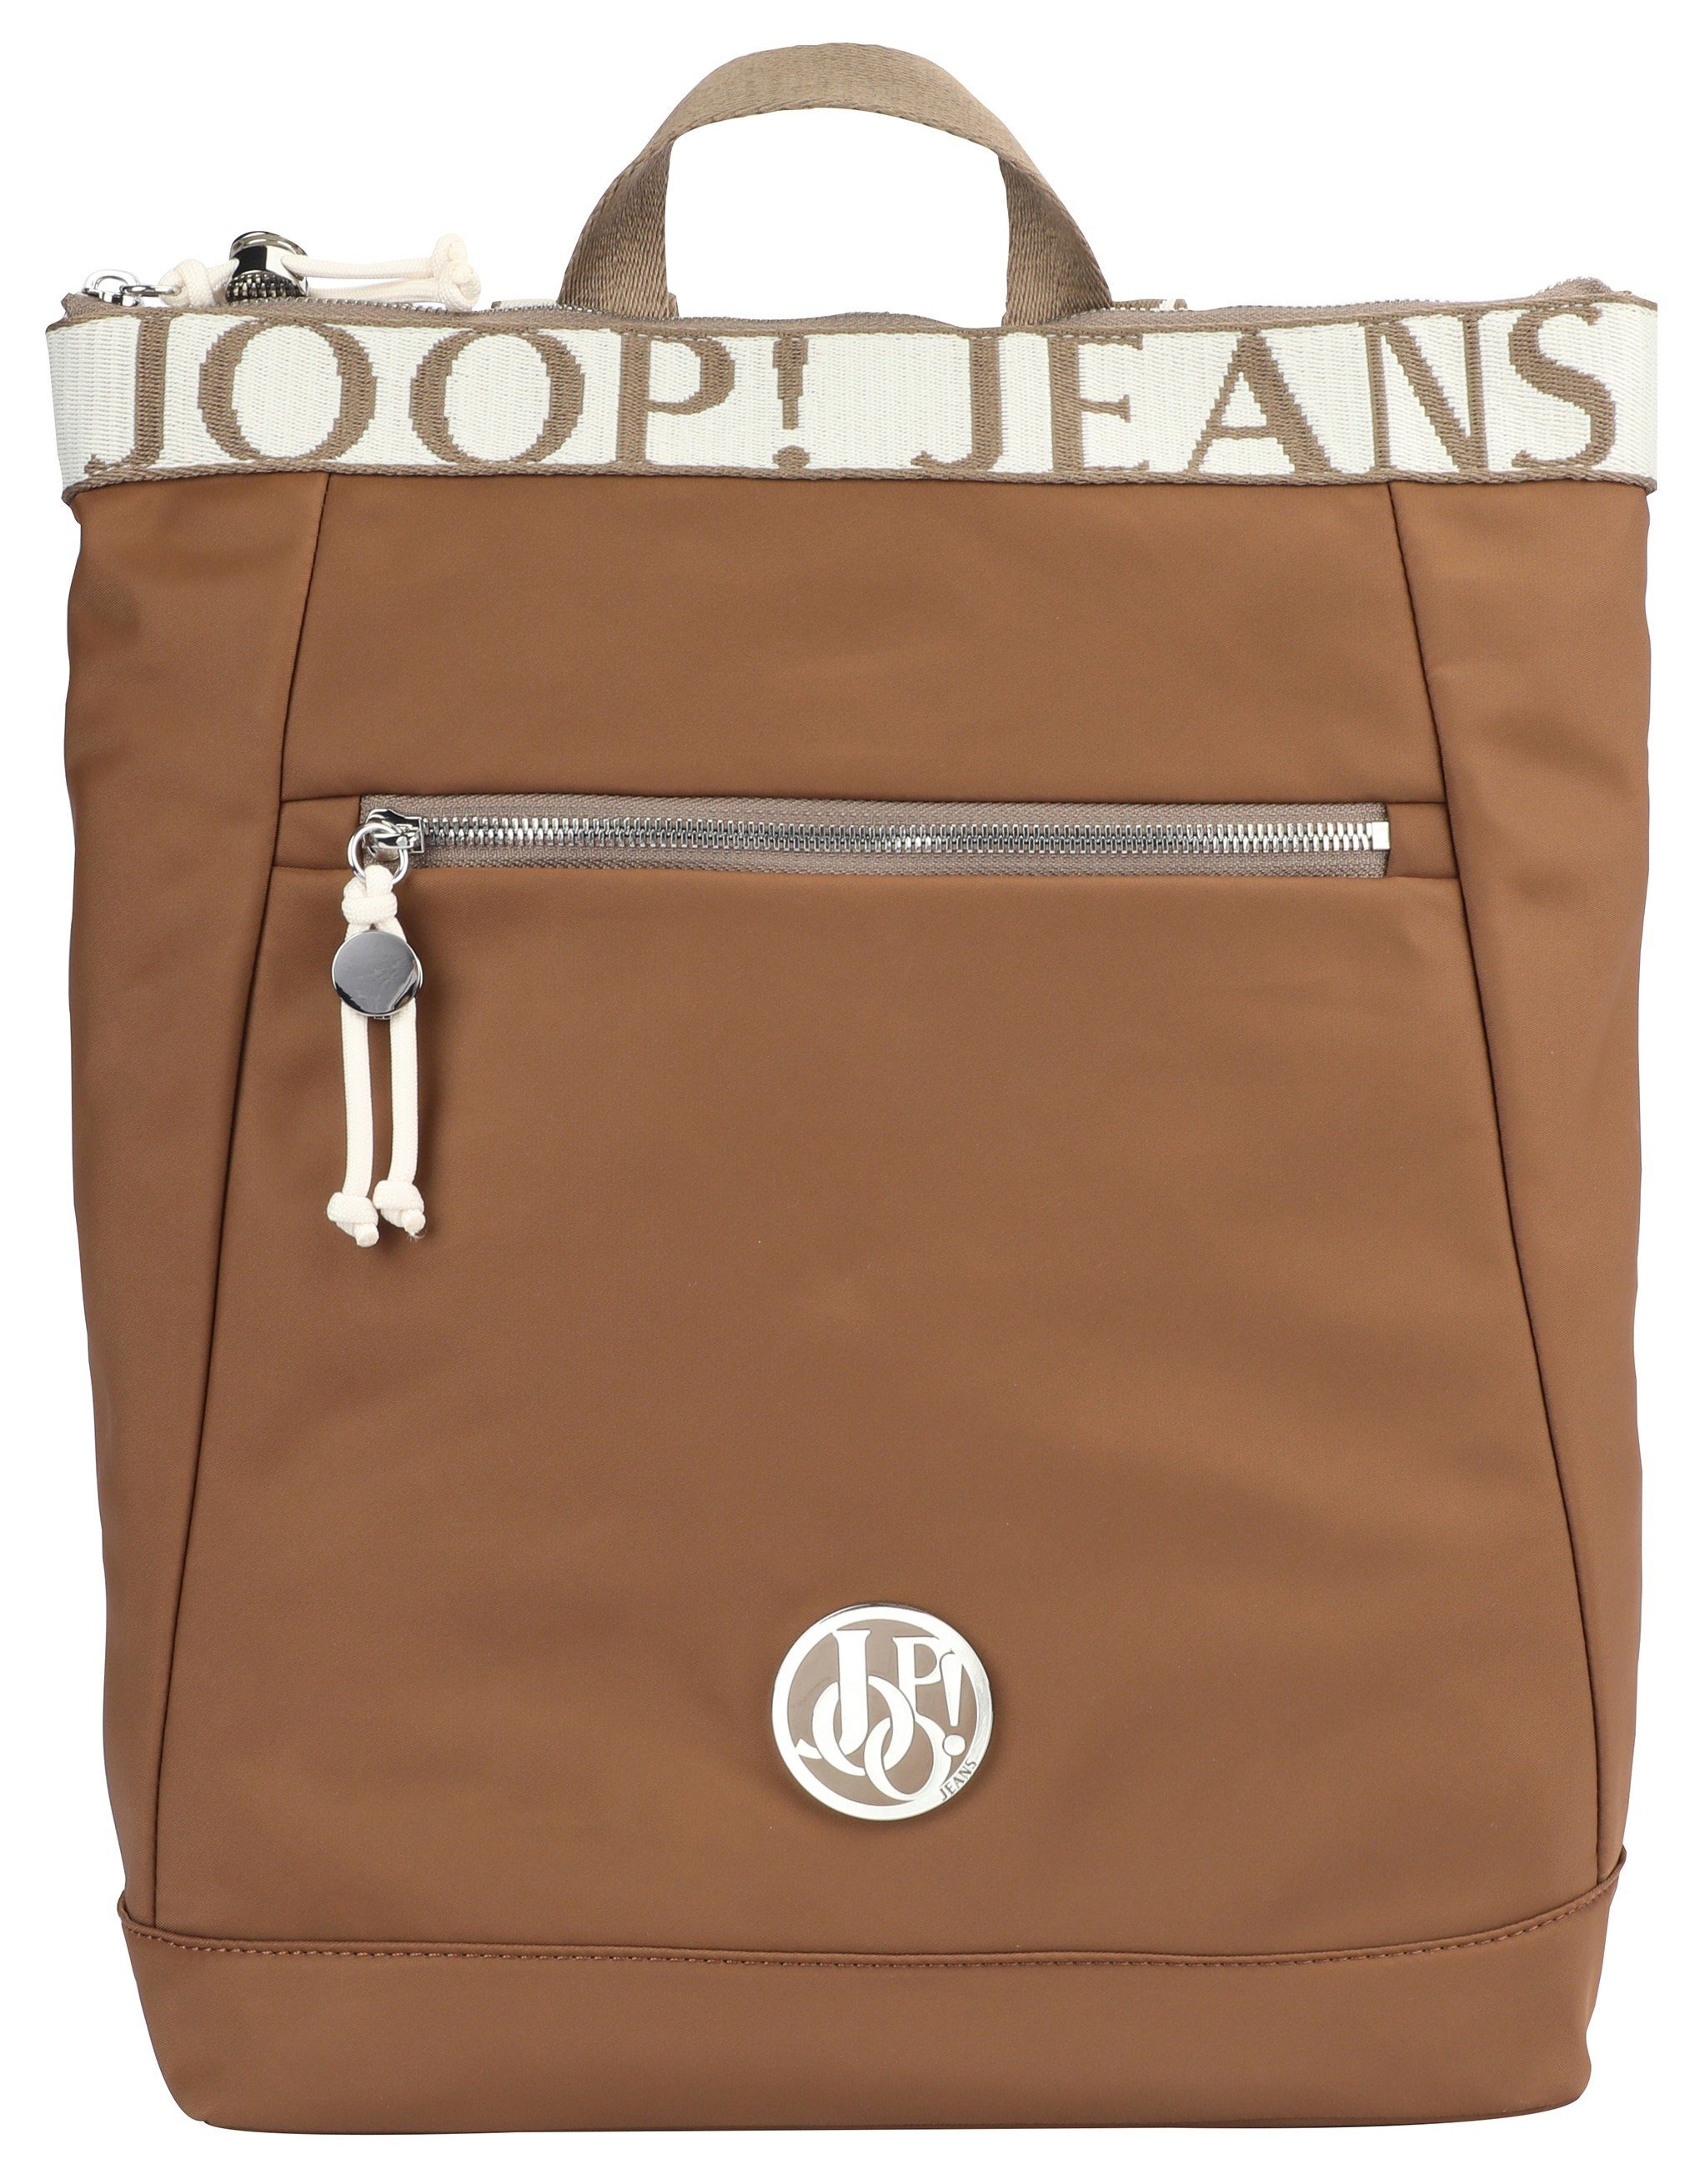 lietissimo mit den auf lvz, backpack elva Joop Schriftzug braun Jeans Trageriemen Logo Joop! Cityrucksack